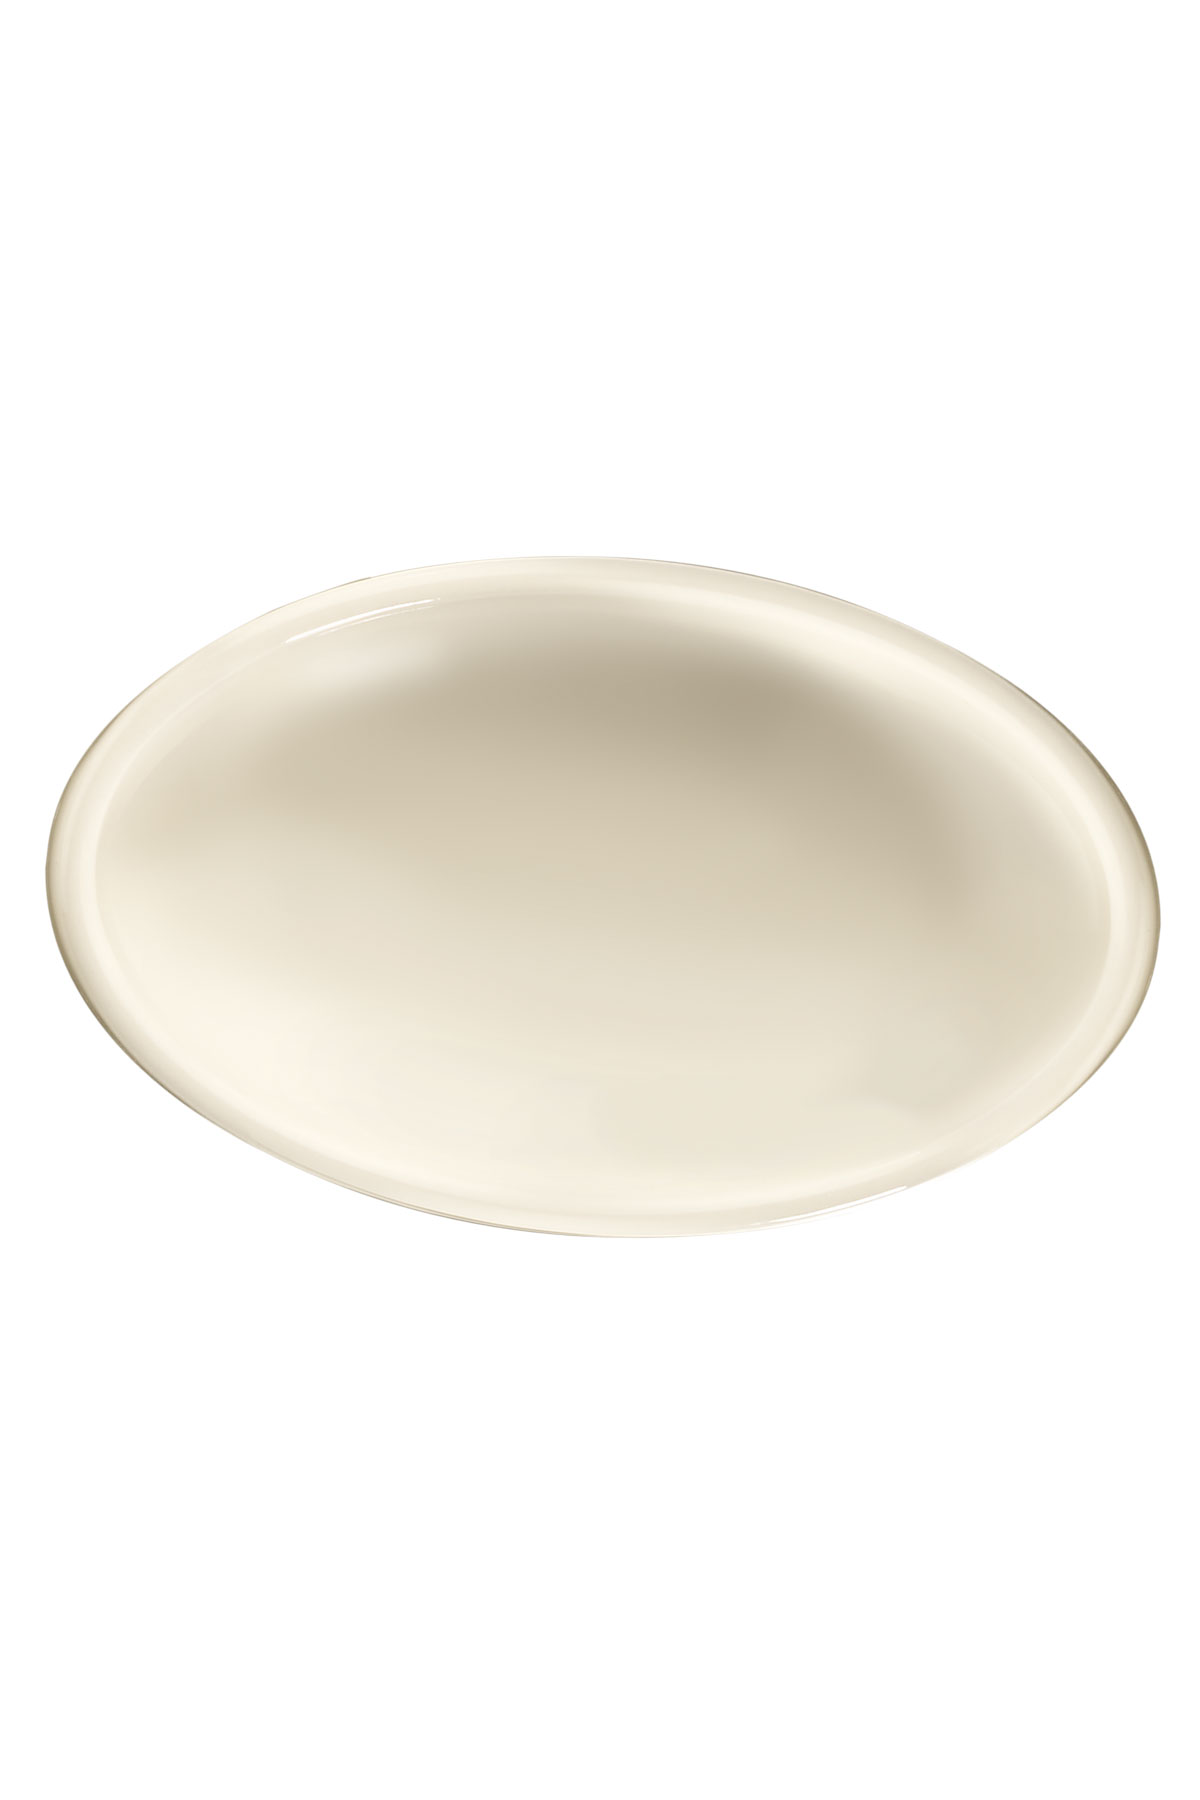 Kütahya Porselen Chef Taste Of 12 cm Oval Kase Krem